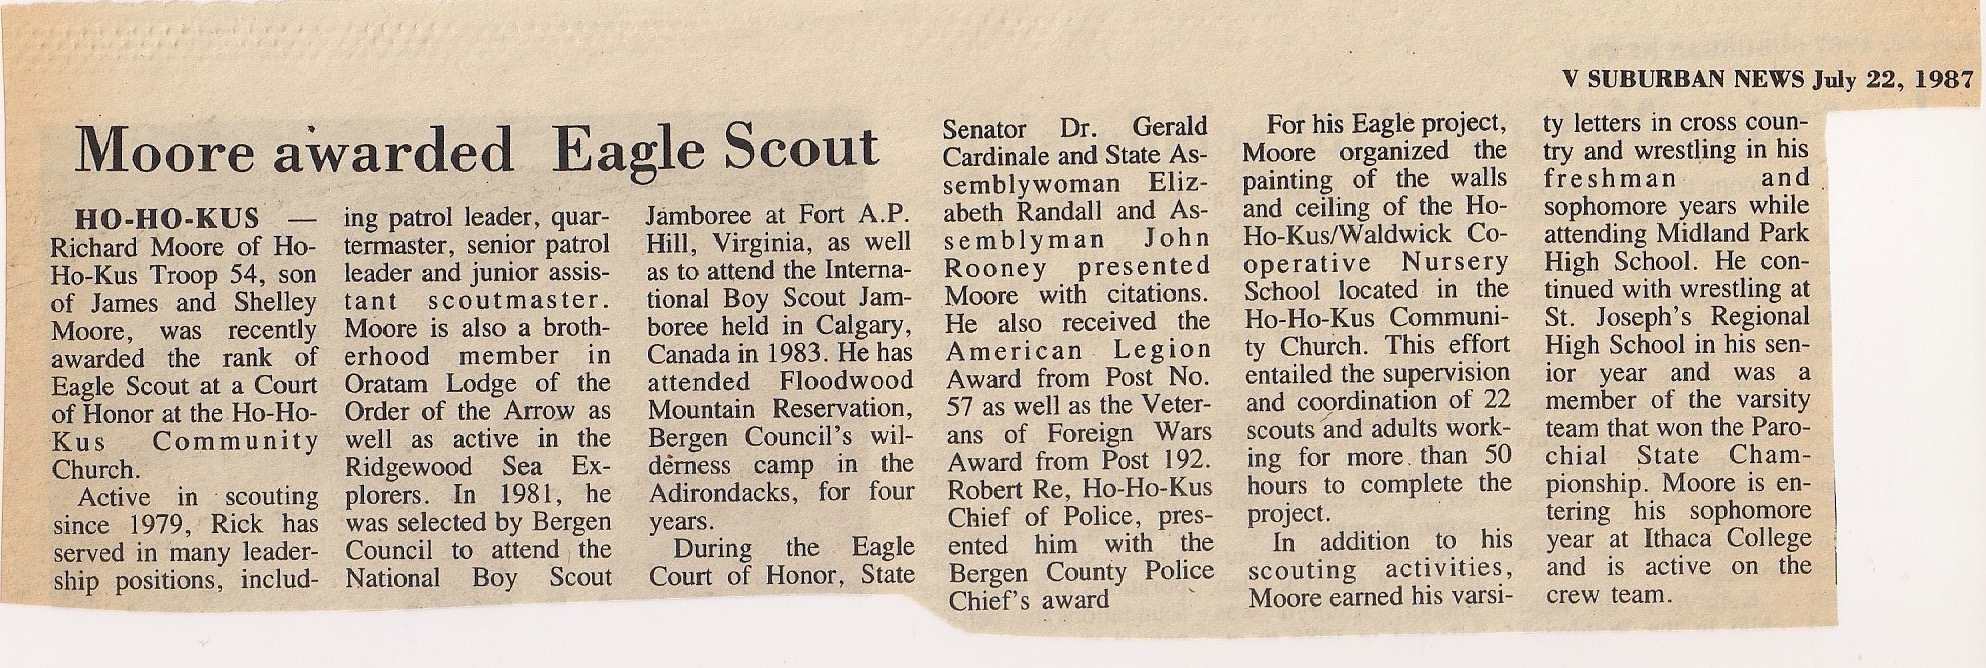 Rick Moore - Eagle Scout - 1987